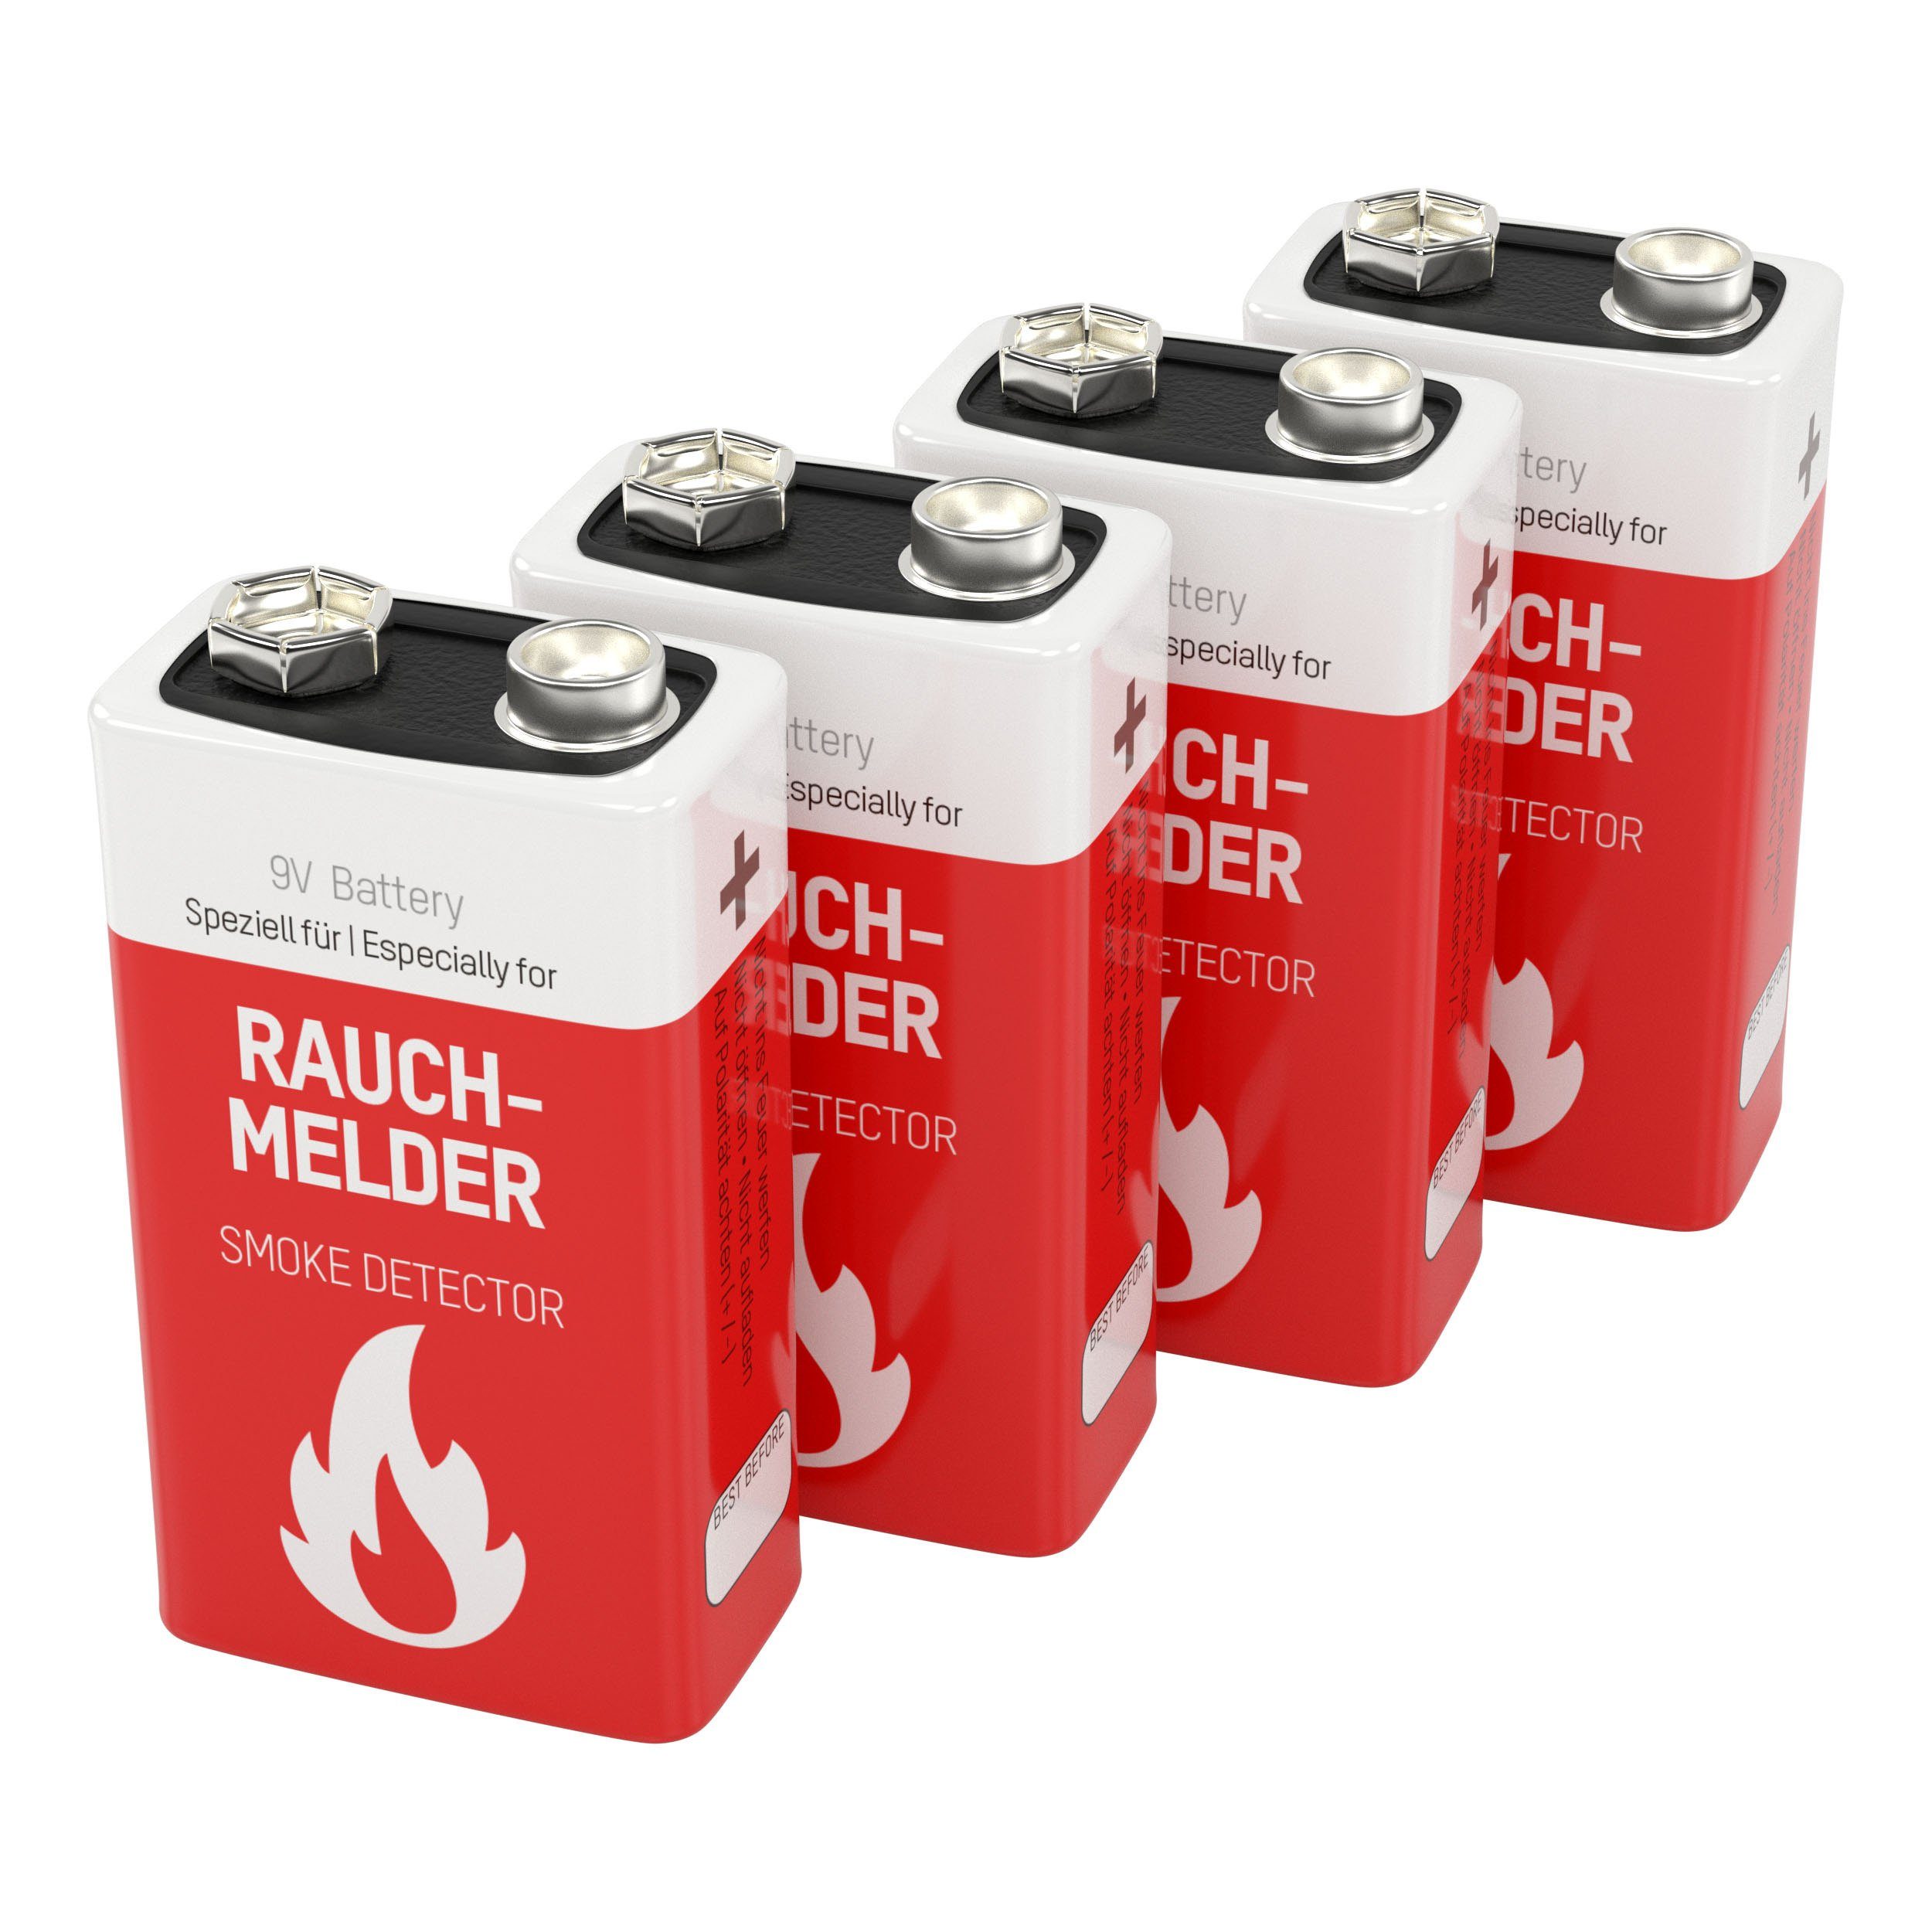 ANSMANN® 4x Lithium 9V longlife - Qualität Premium Block Batterien Rauchmelder Batterie